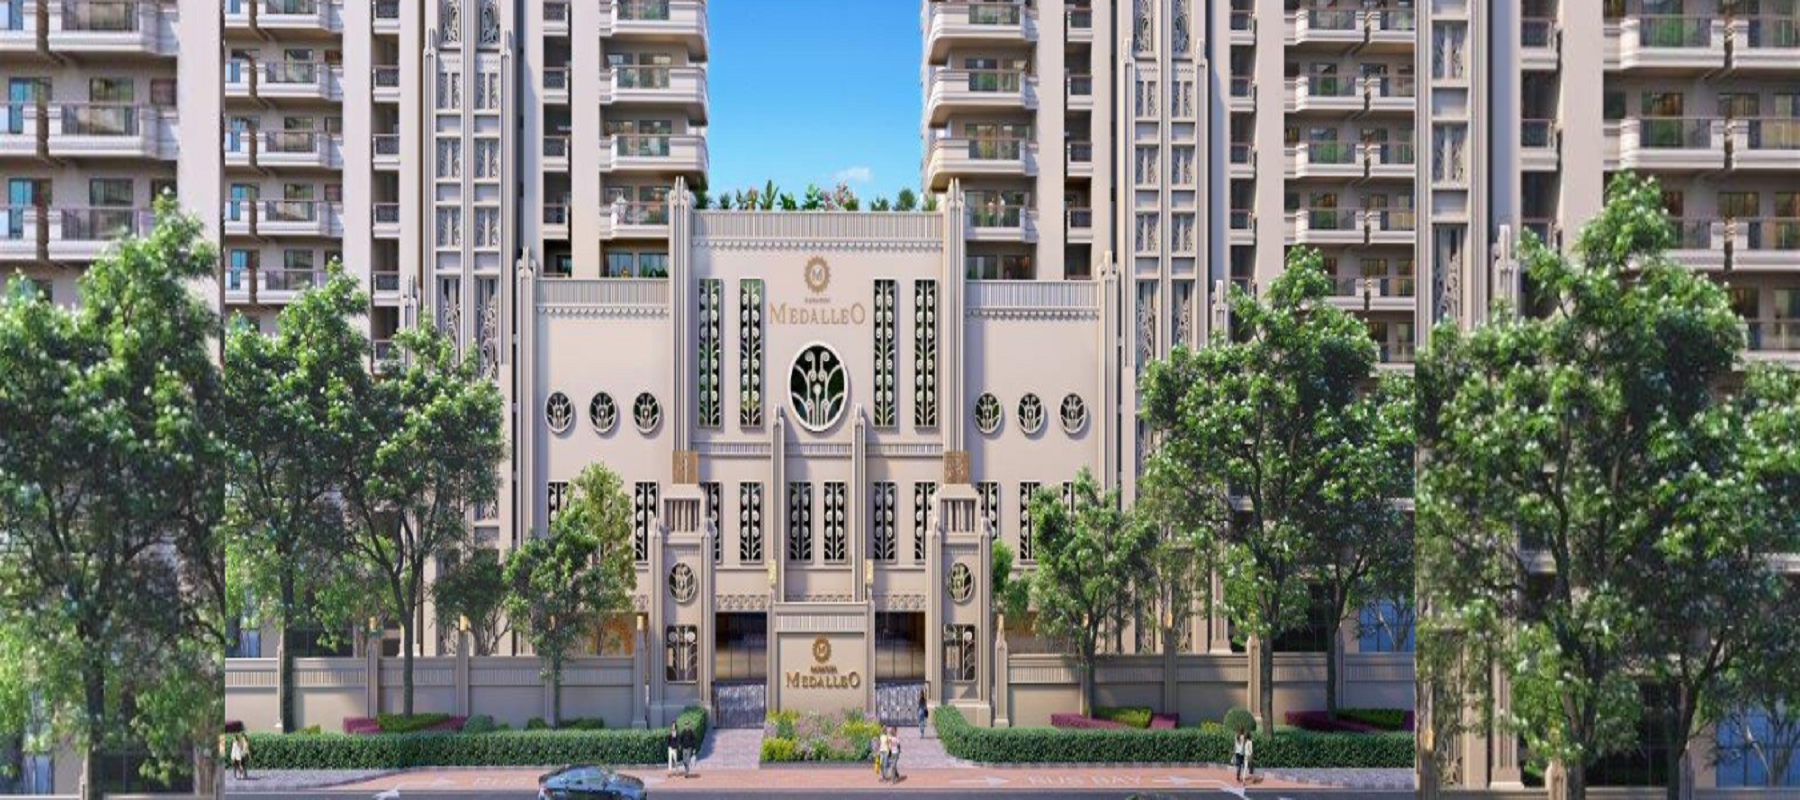 Mahagun Medalleo - Offers Luxurious 3 & 4 BHK Homes in Noida